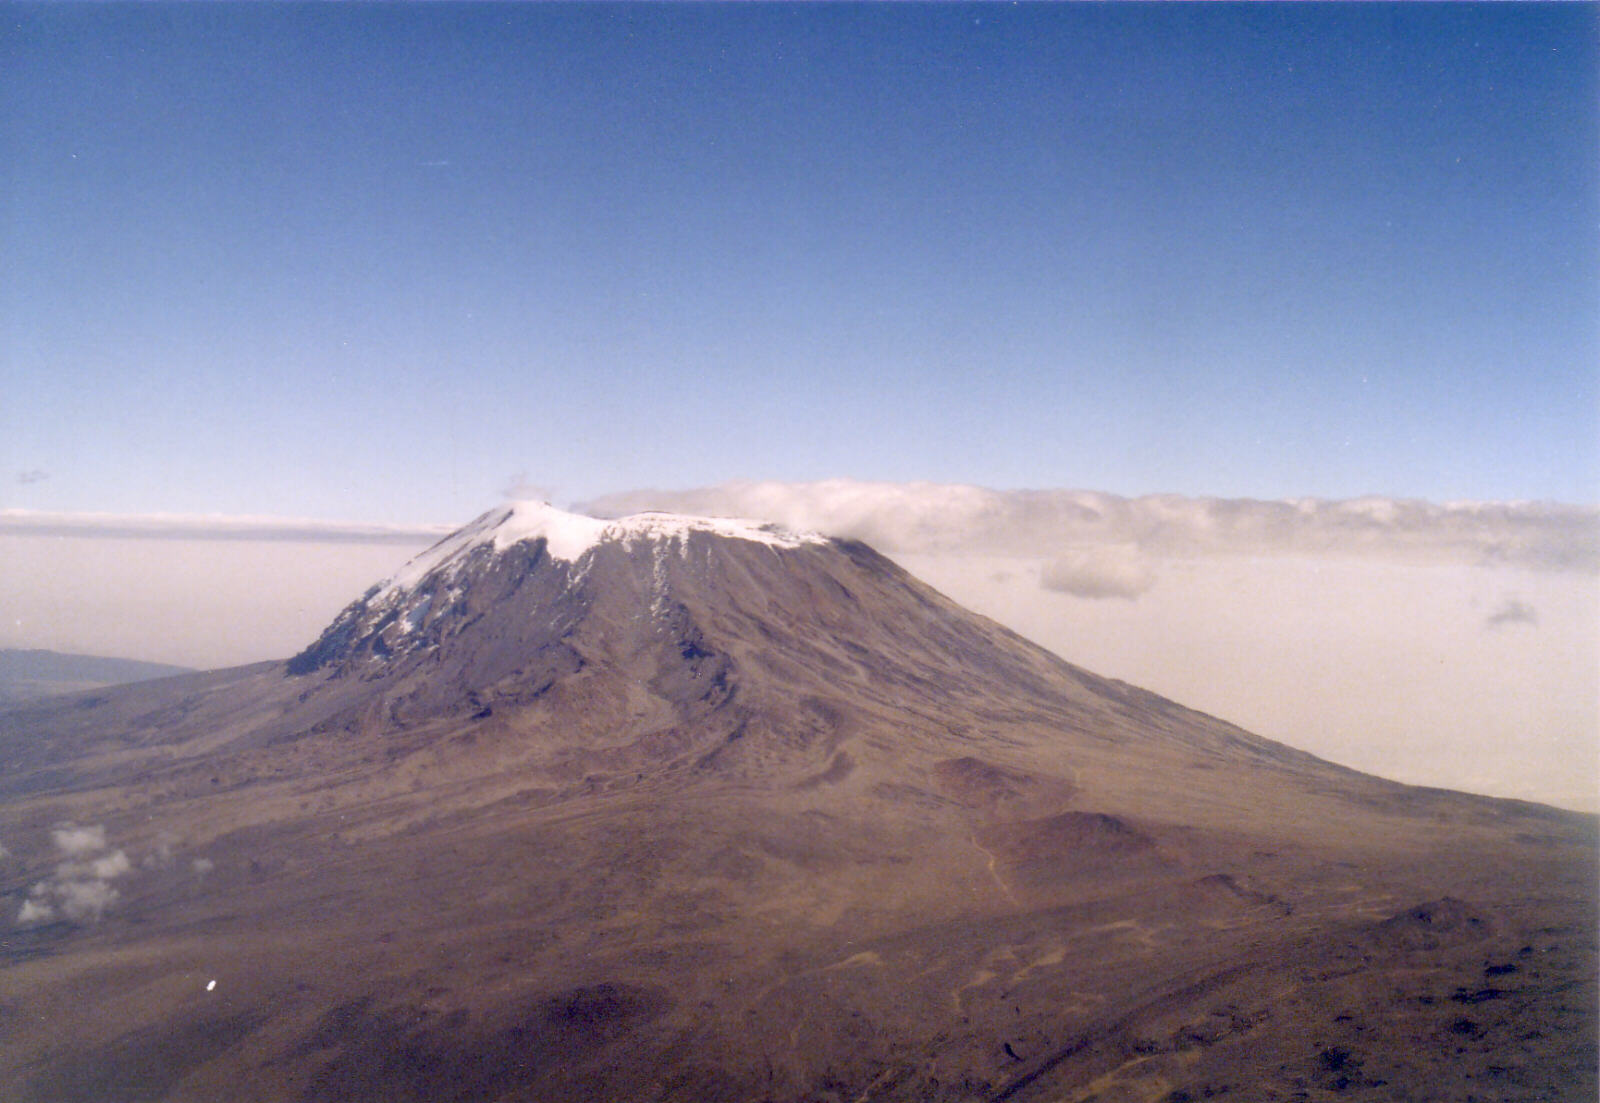 Mount Kilimanjaro from the aeroplane